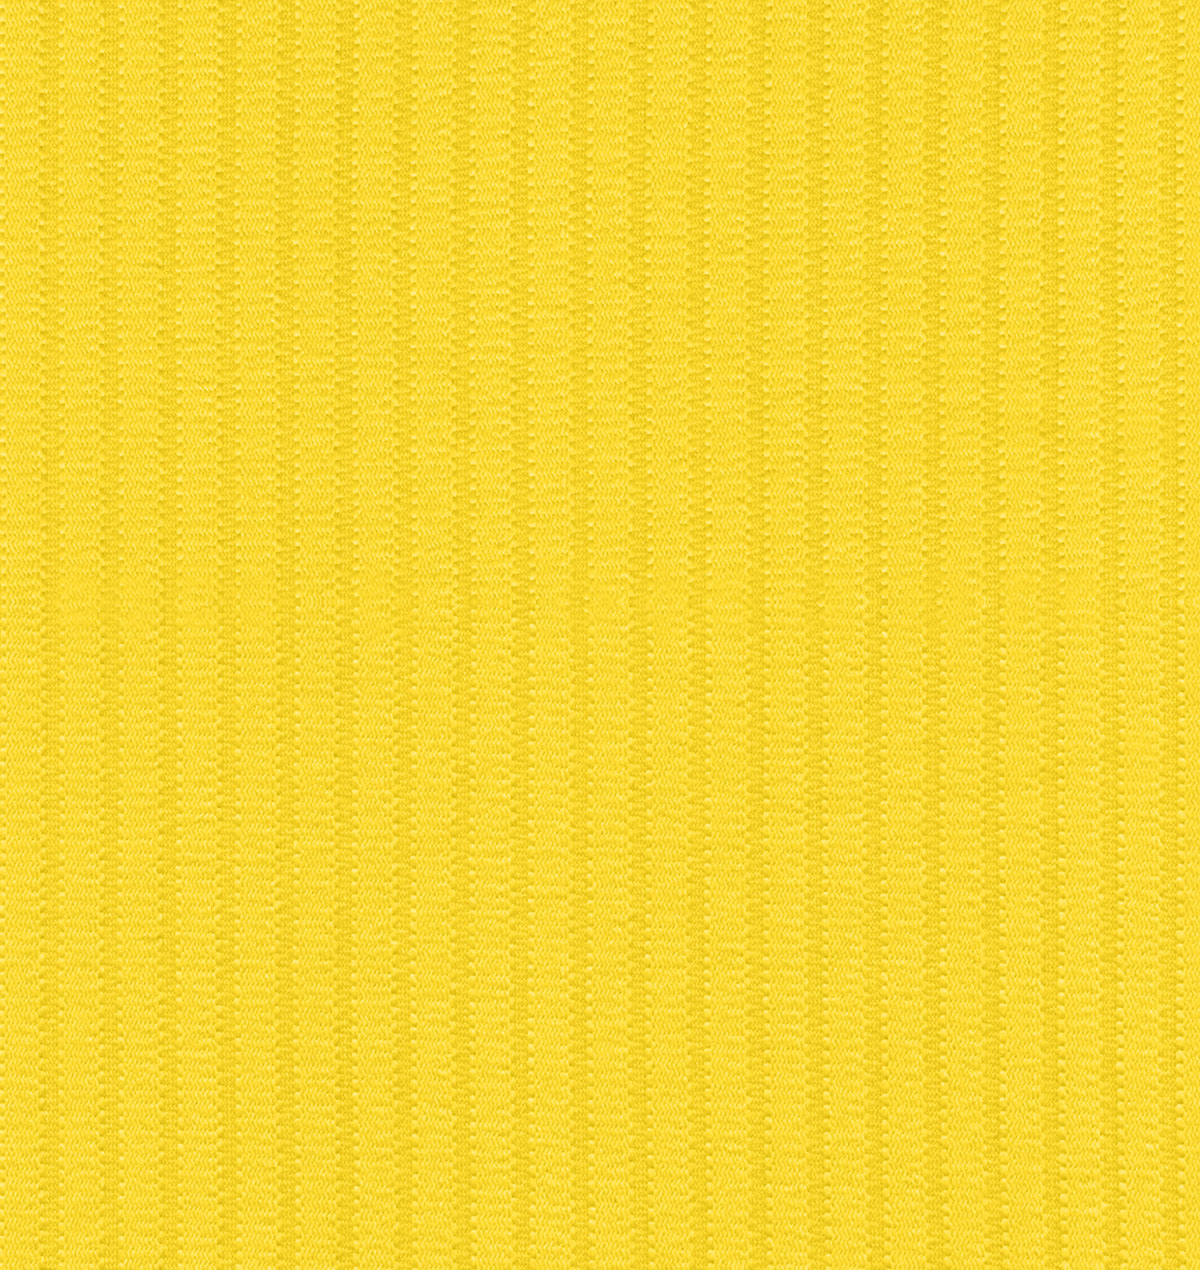 Sunsets Lemon Zest Sandbar Rib solid yellow swimsuit color on a signature ribbed fabric